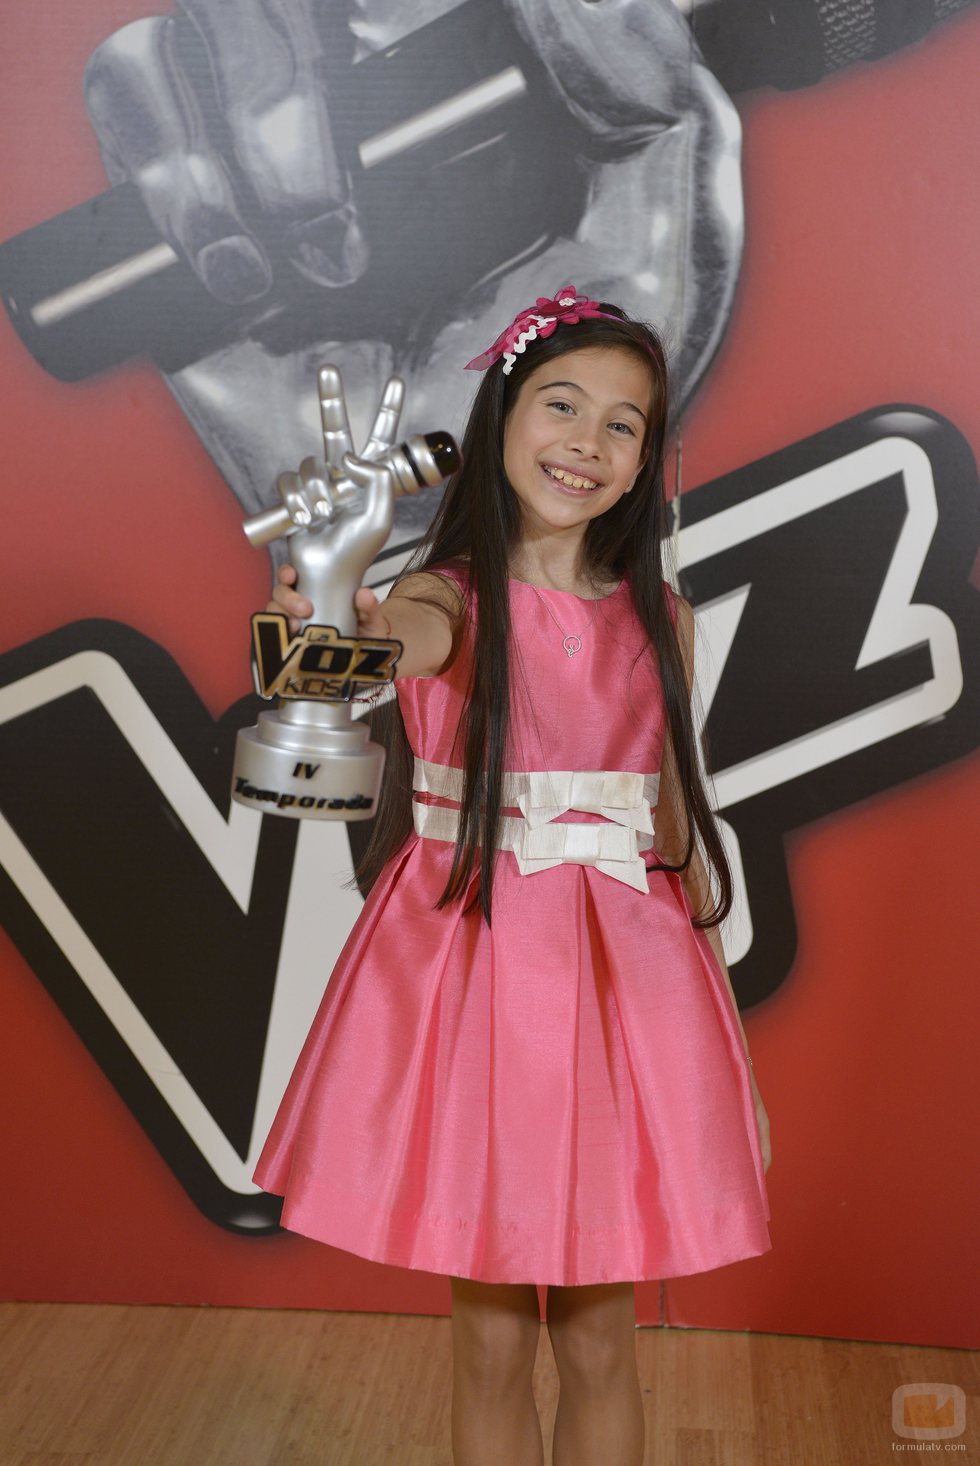 Melani posa con su trofeo tras ganar 'La Voz Kids 4'